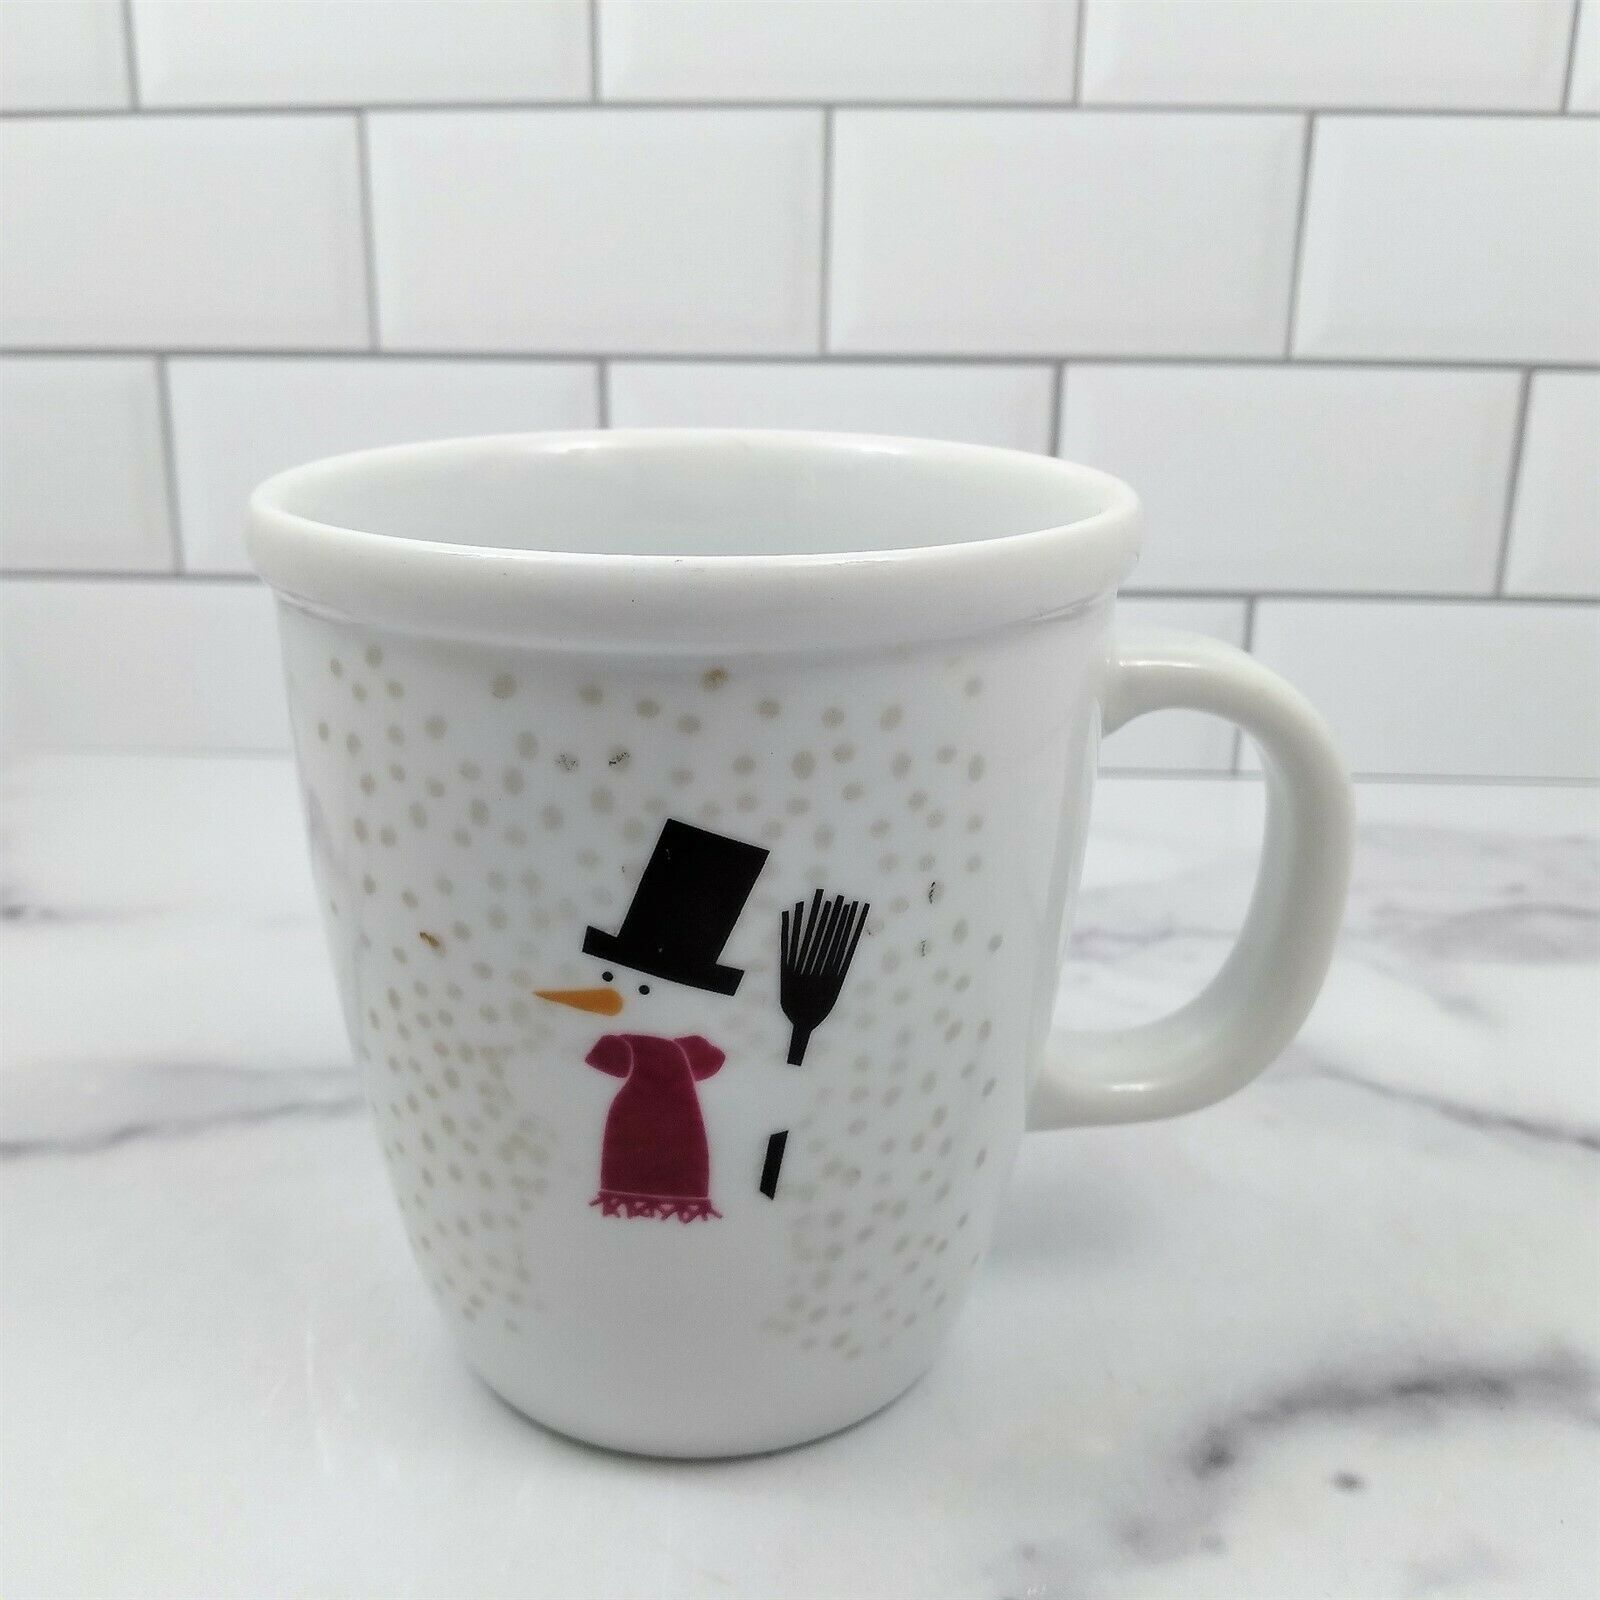 Snowman Coffee Mug Beverage Cup - $8.54